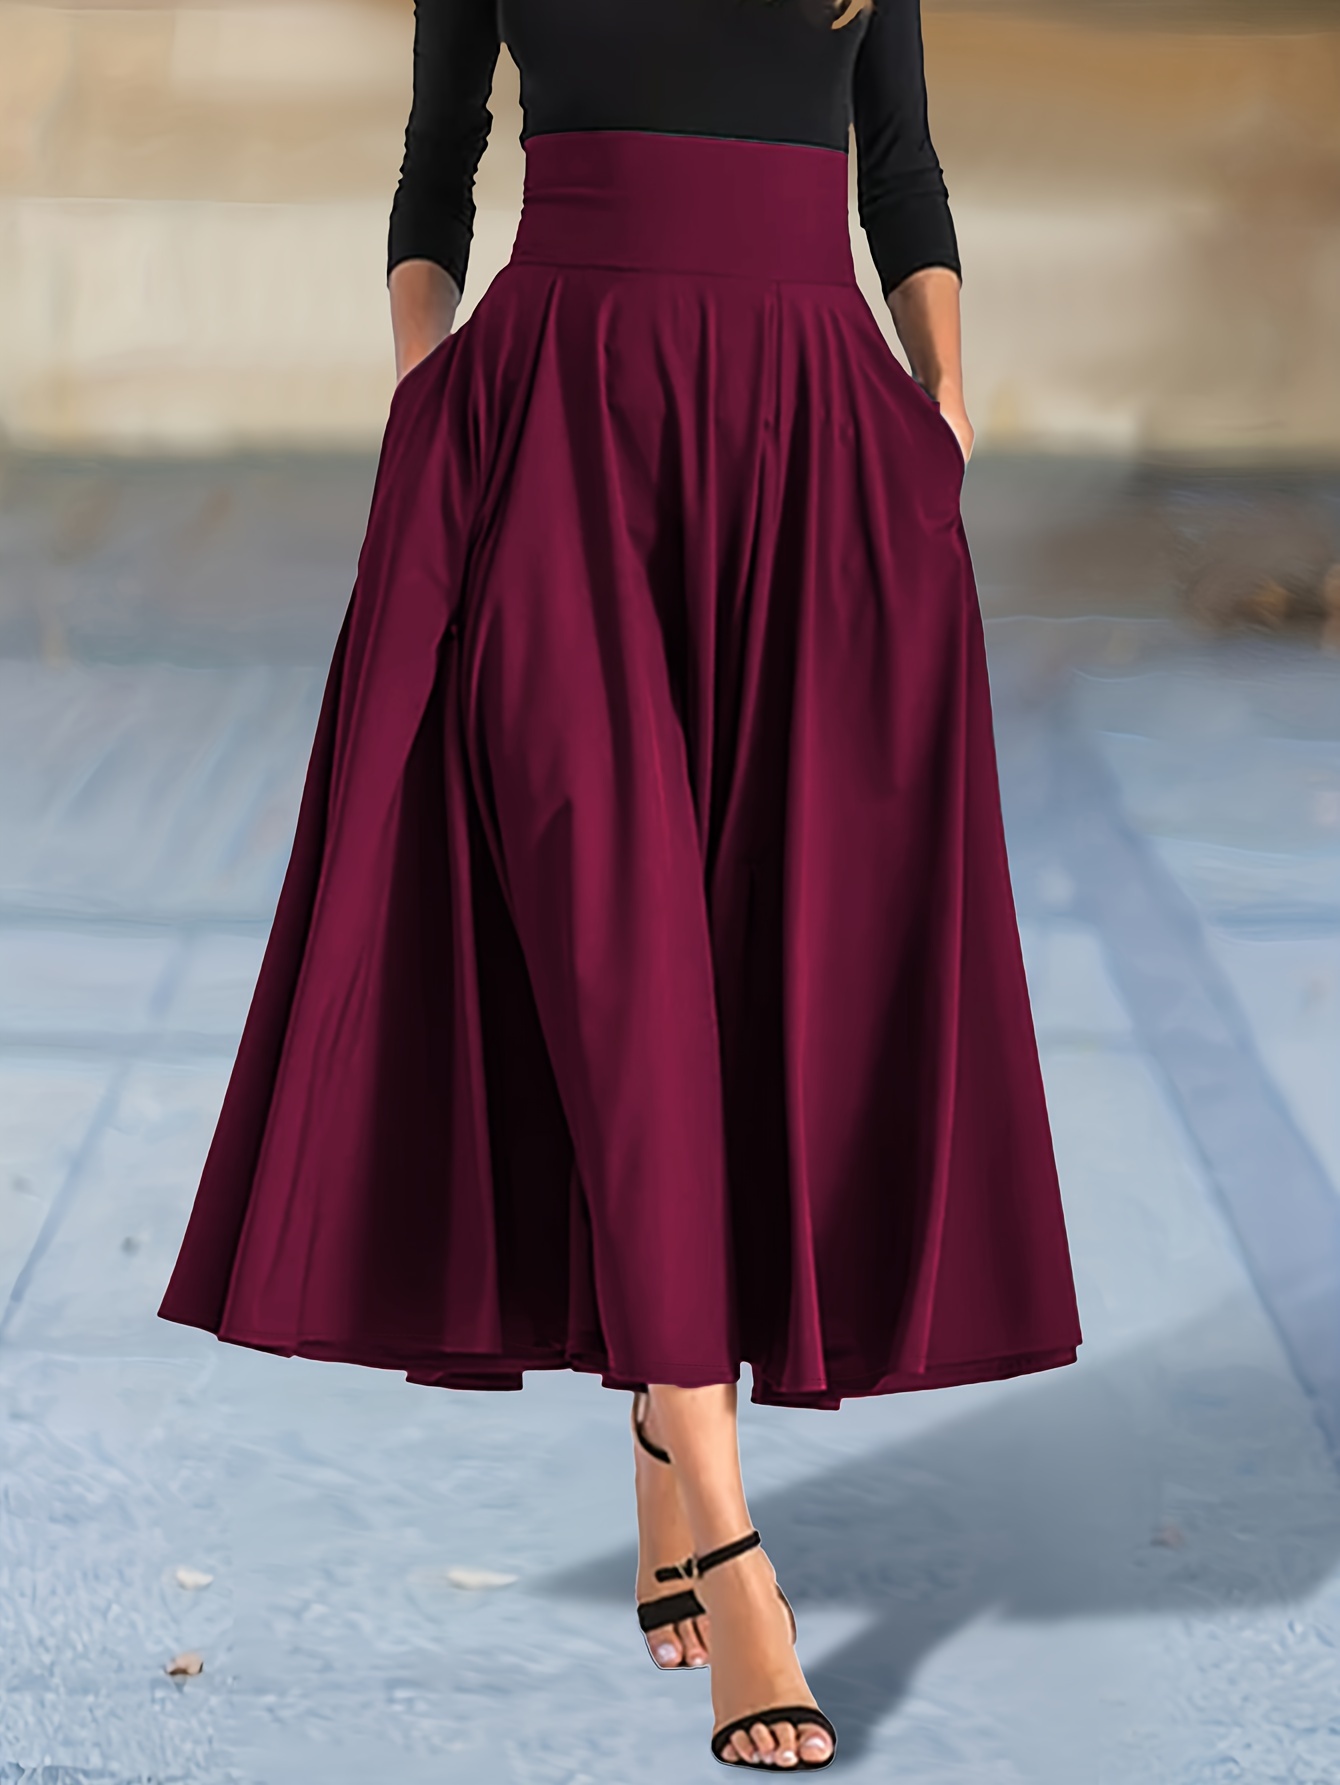 Chicwish Maxi Skirt Burgundy Flowy Party Elegant Flared size S NWT